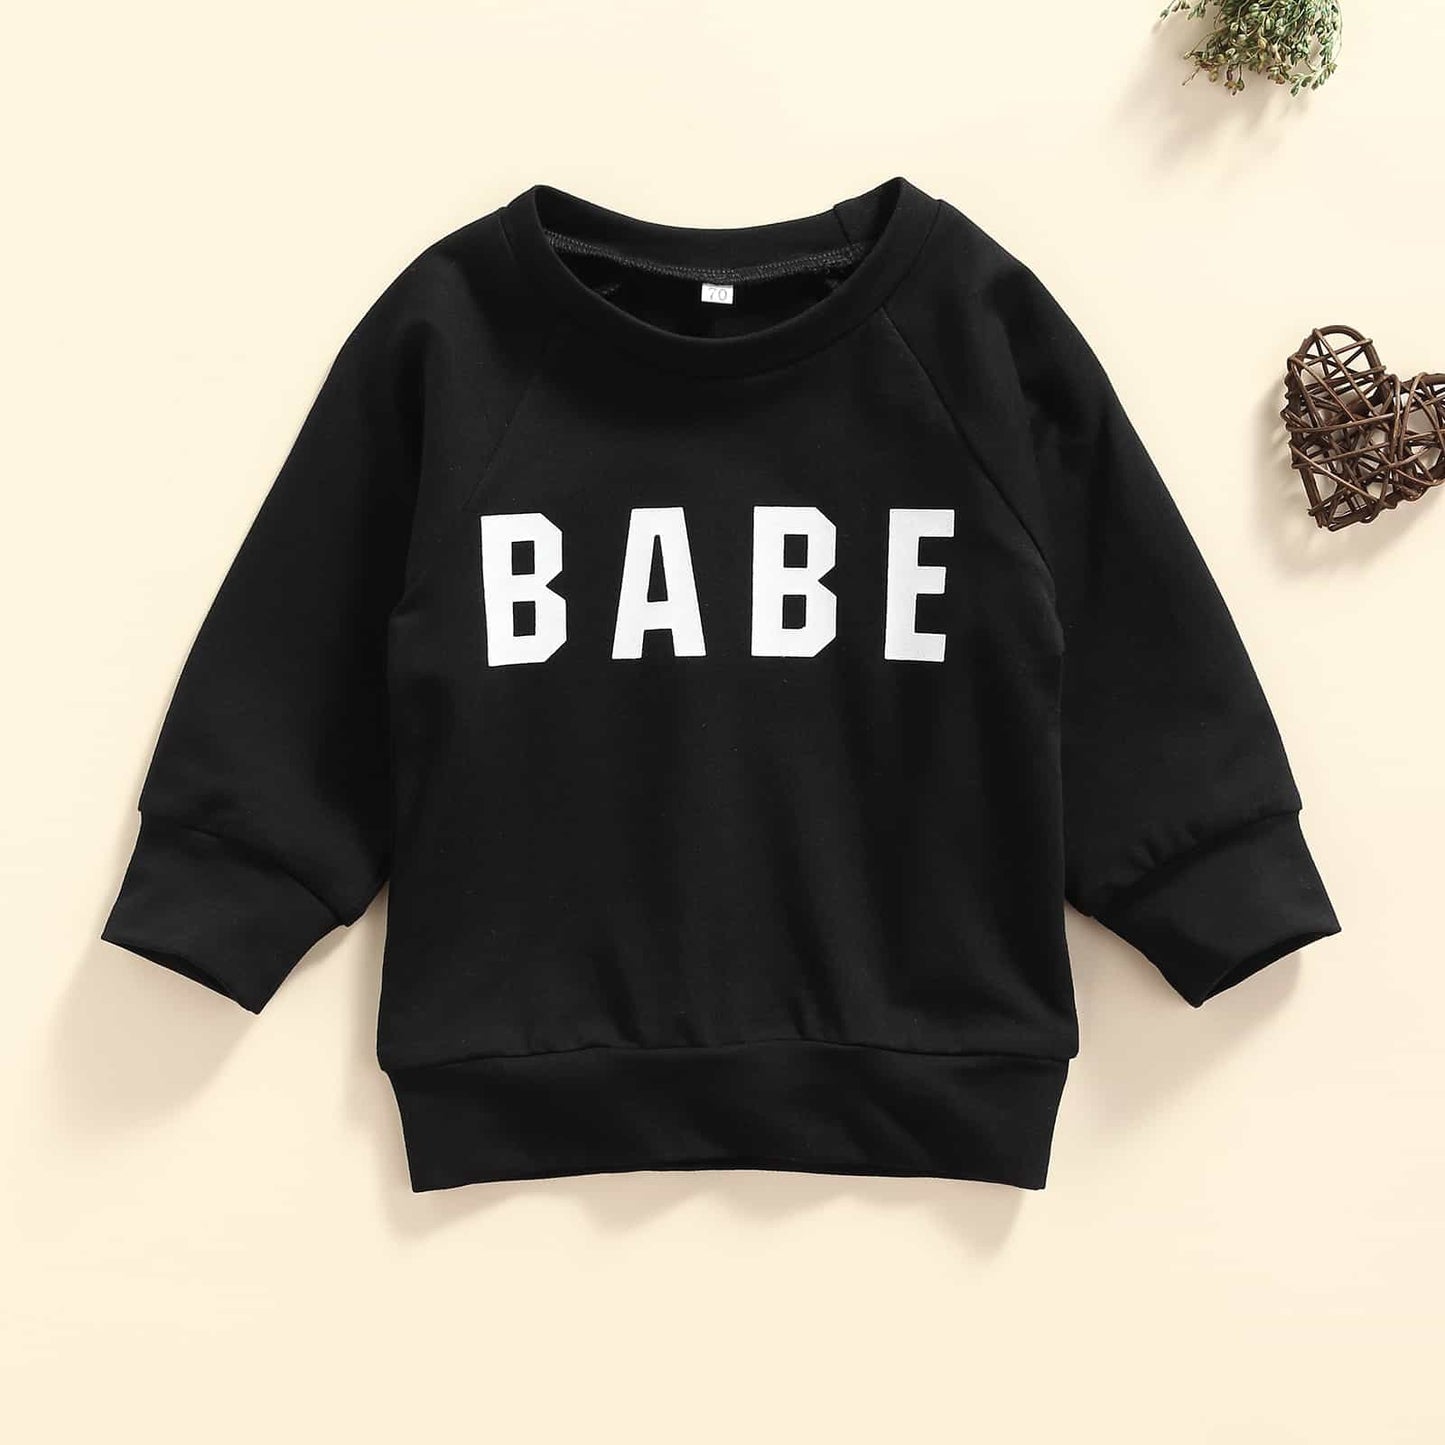 Babe Casual Sweatshirt